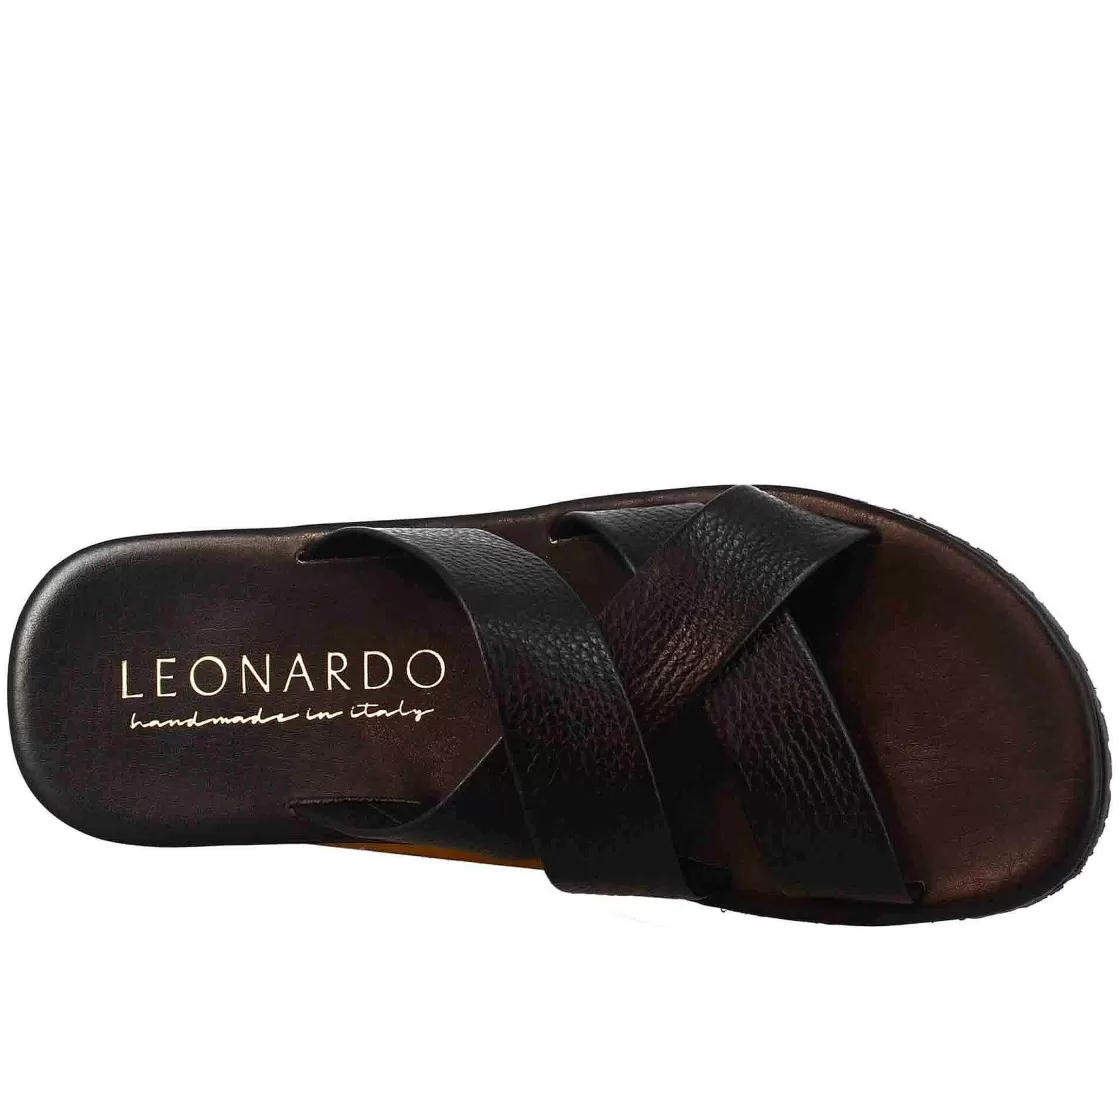 Leonardo Men'S Slipper Sandals With Three Crossed Bands Handmade In Black Leather Fashion